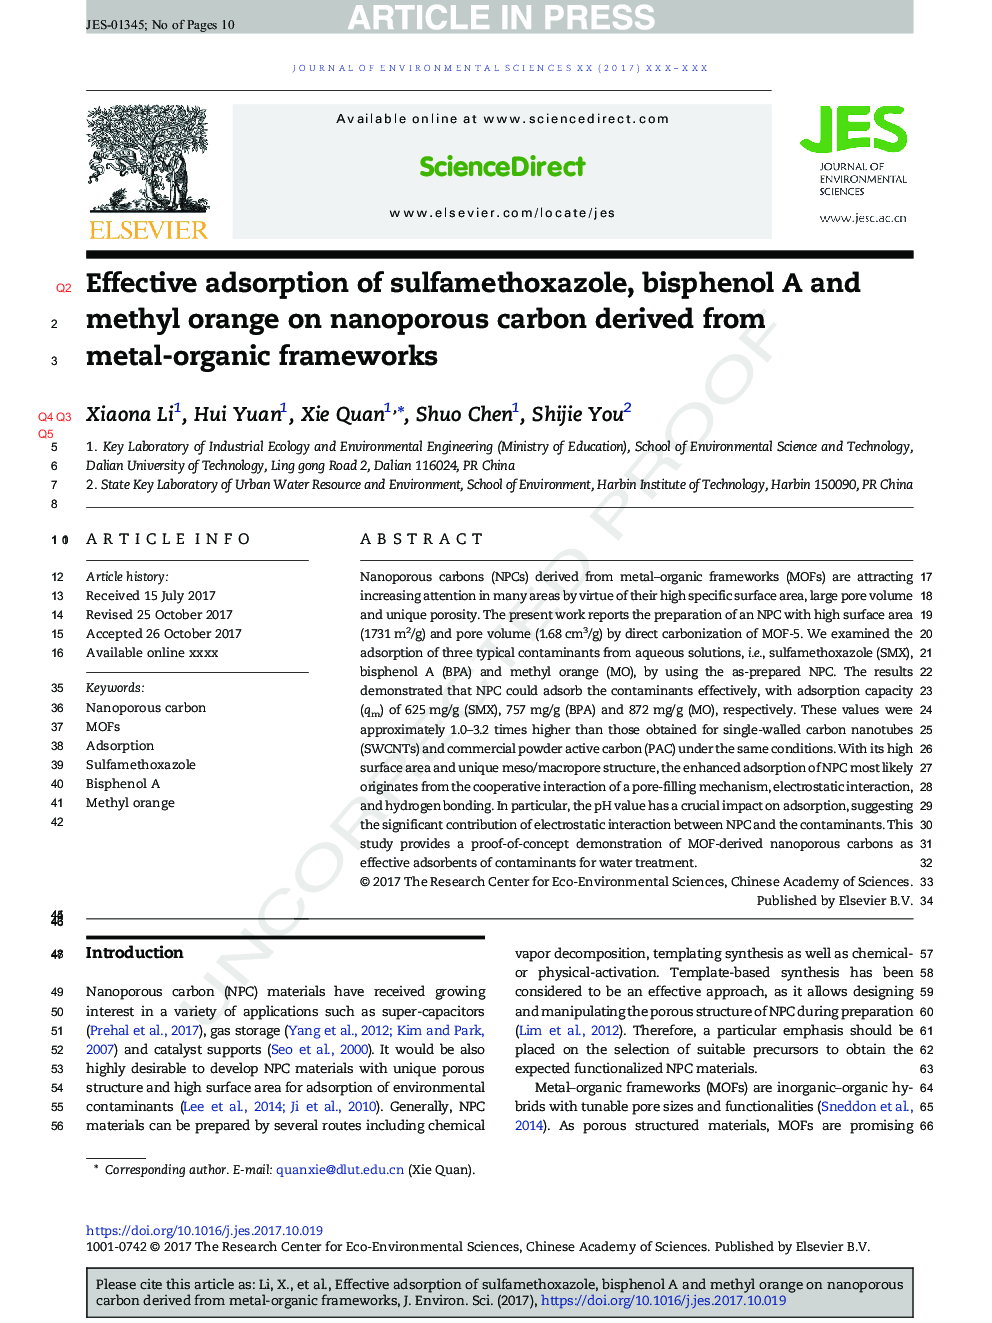 Effective adsorption of sulfamethoxazole, bisphenol A and methyl orange on nanoporous carbon derived from metal-organic frameworks